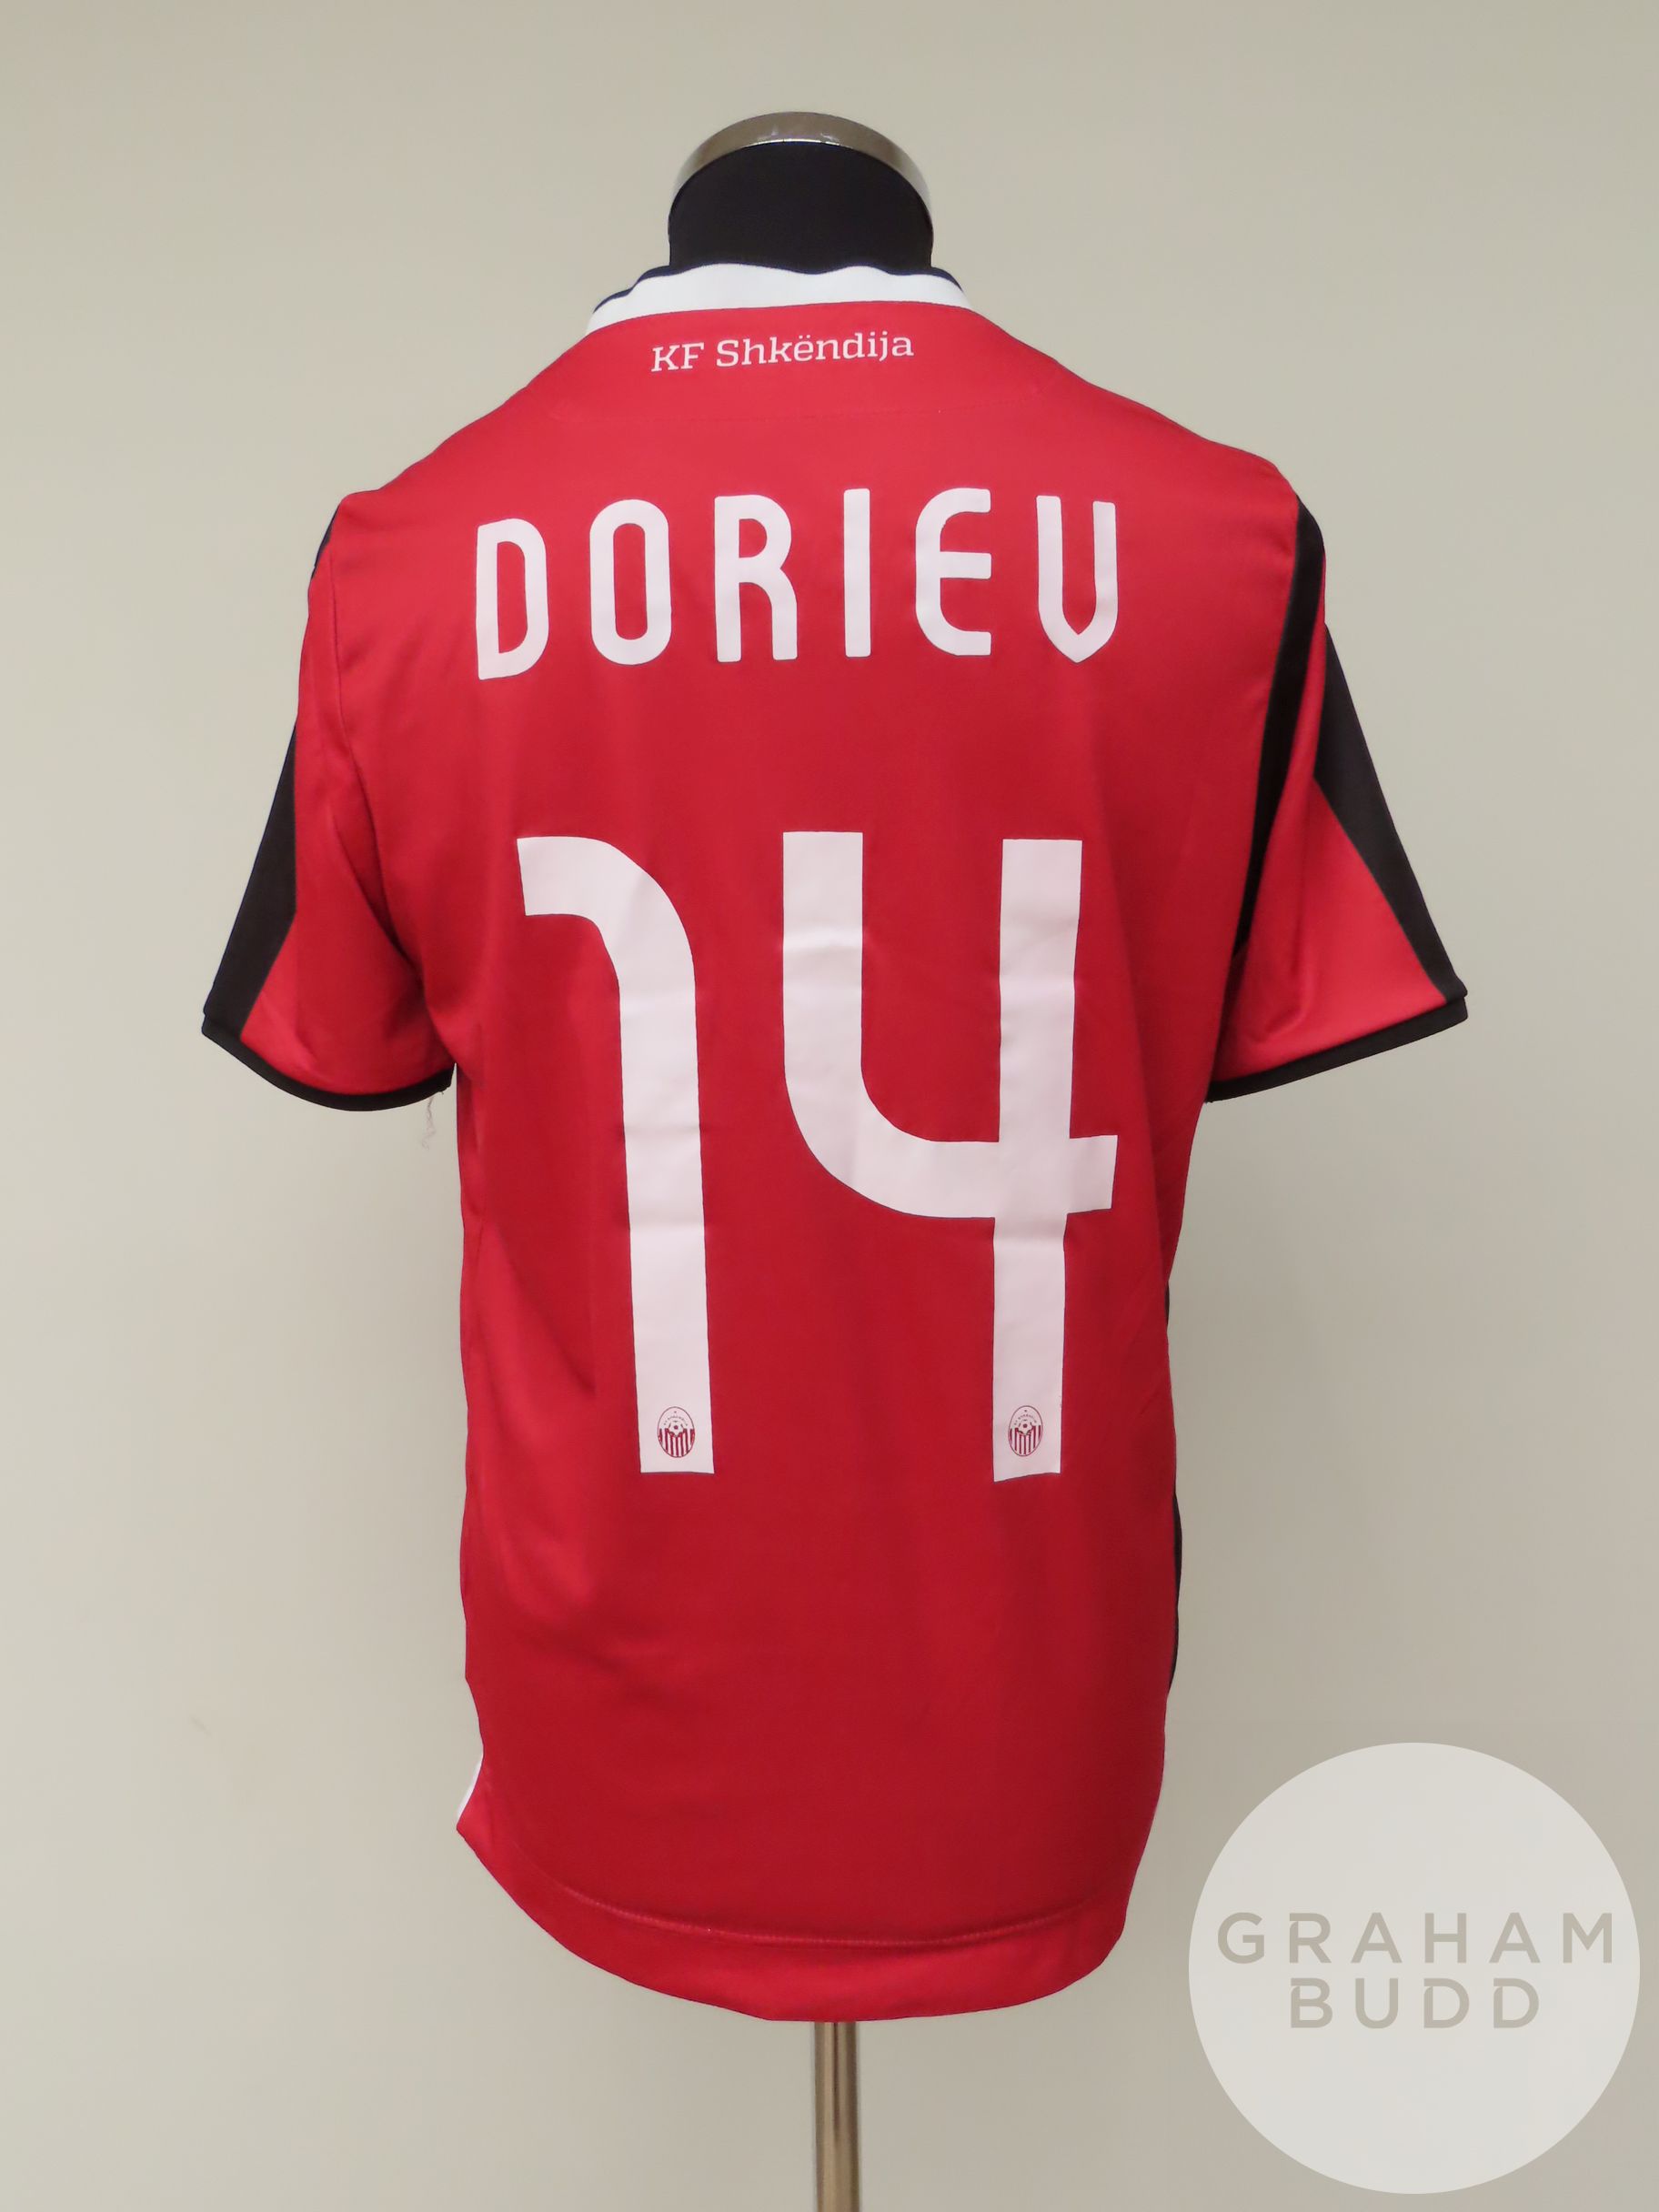 Ljupcho Doriev red, white and black Shkendija no.14 shirt, 2020-21, - Image 2 of 2